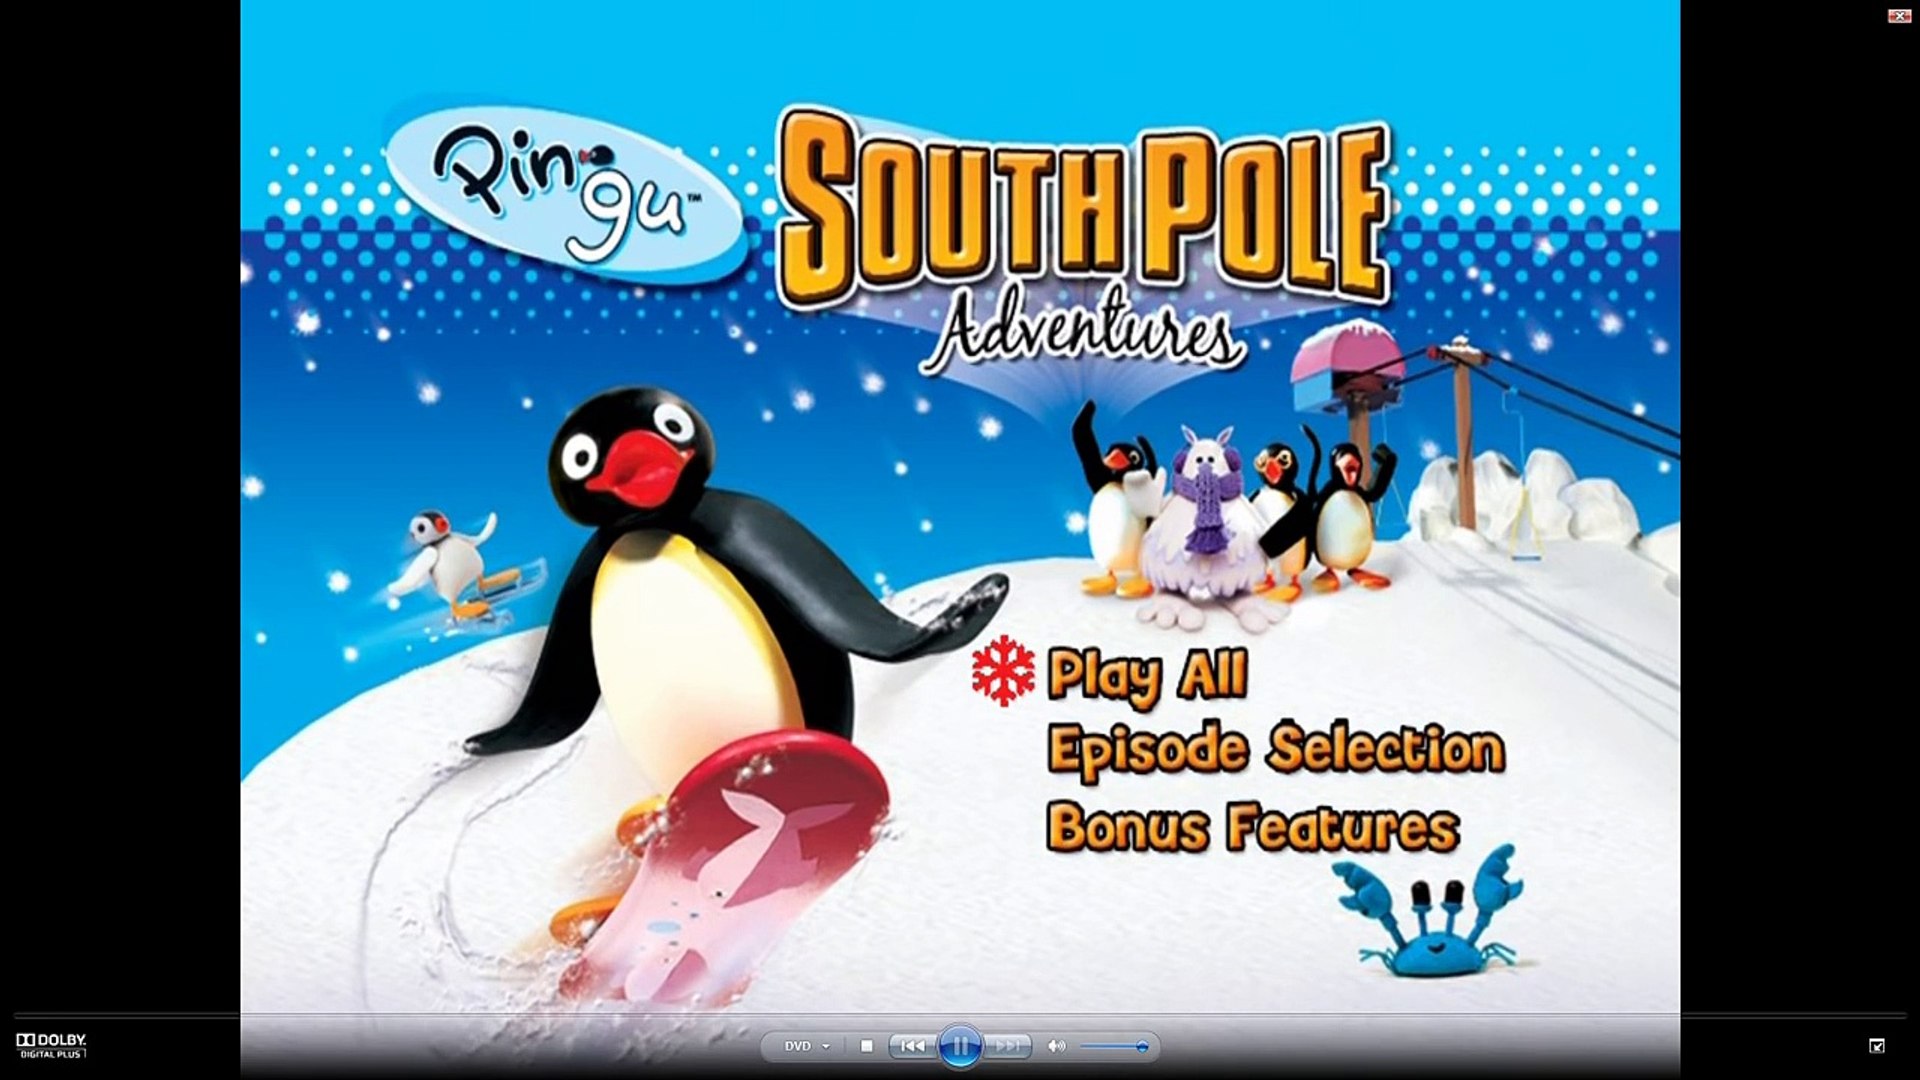 Pingu: South Pole Adventures 2008 DVD Menu Walkthrough - video Dailymotion